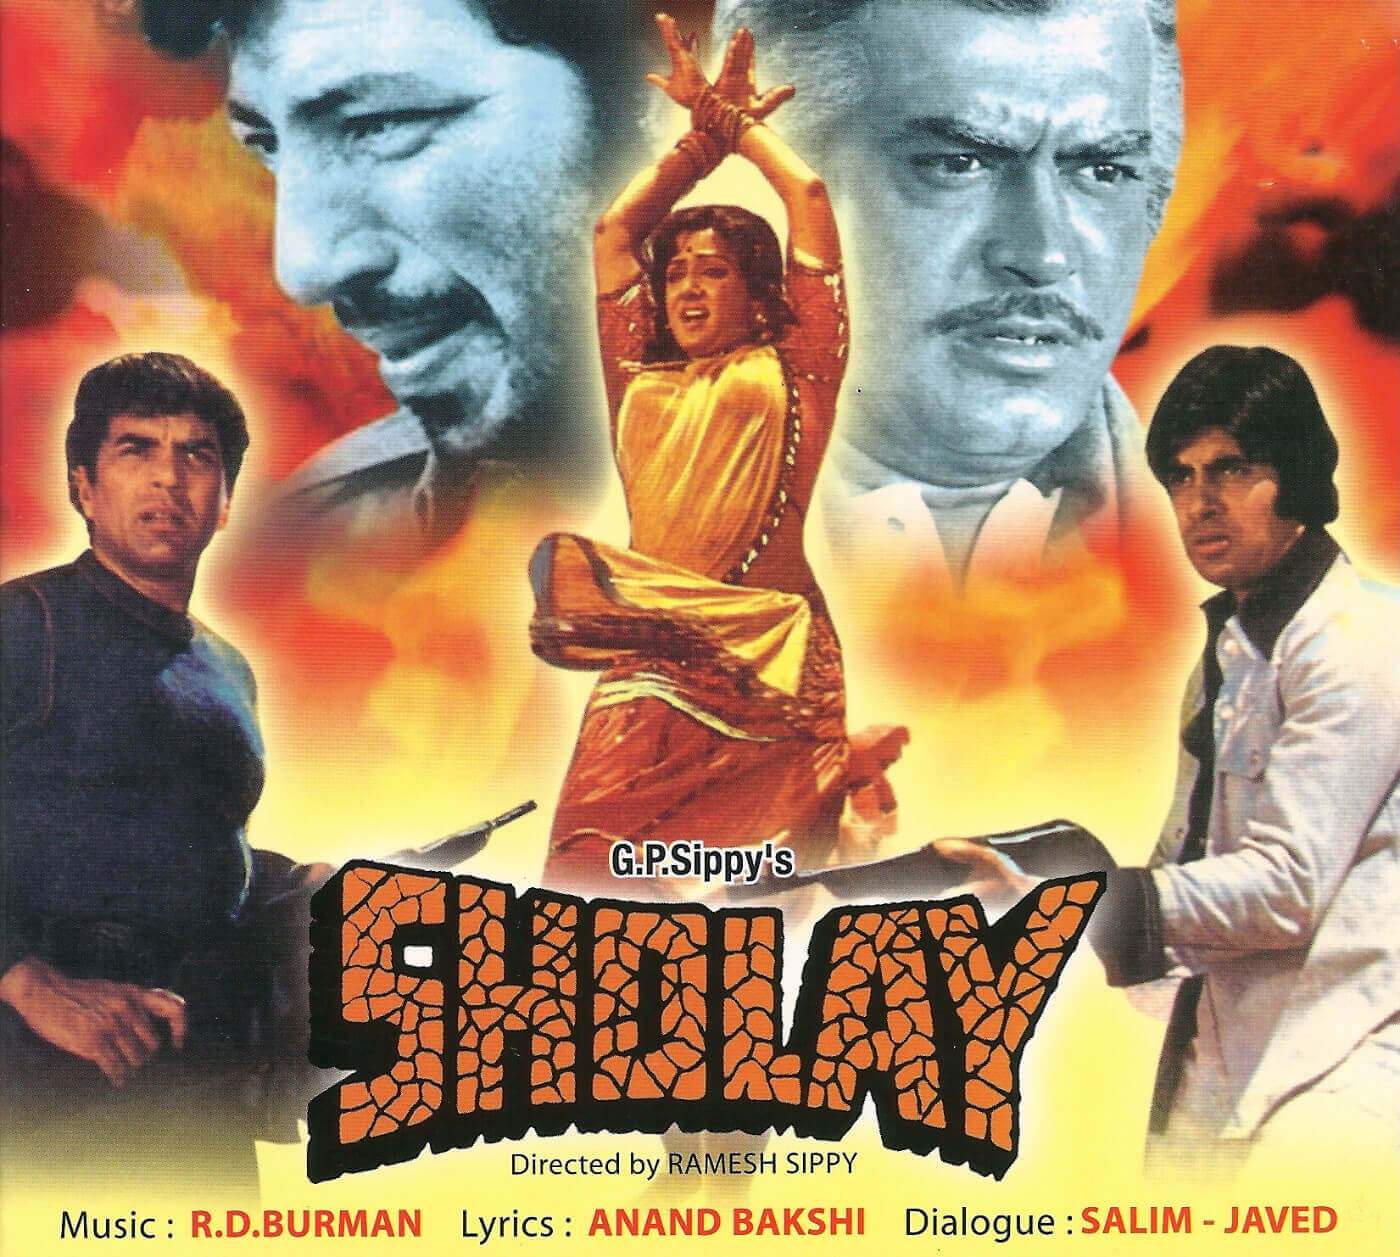 Sholay Amitabh Bachchan Tallenge Bollywood Hindi Movie Poster Collection 01807986 dde3 4f69 b99a 77eae366c0ae